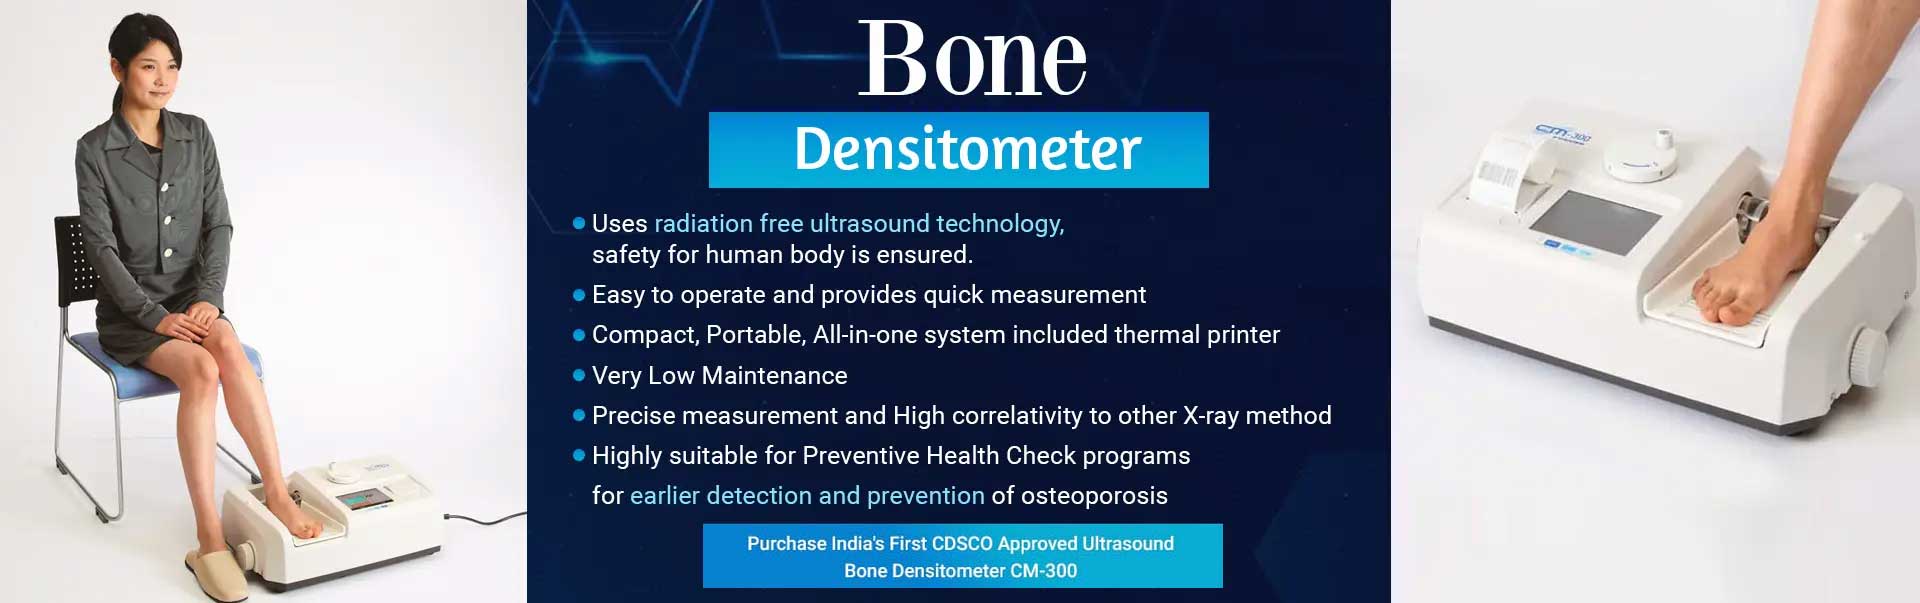 Bone Densitometer Manufacturers in Coimbatore